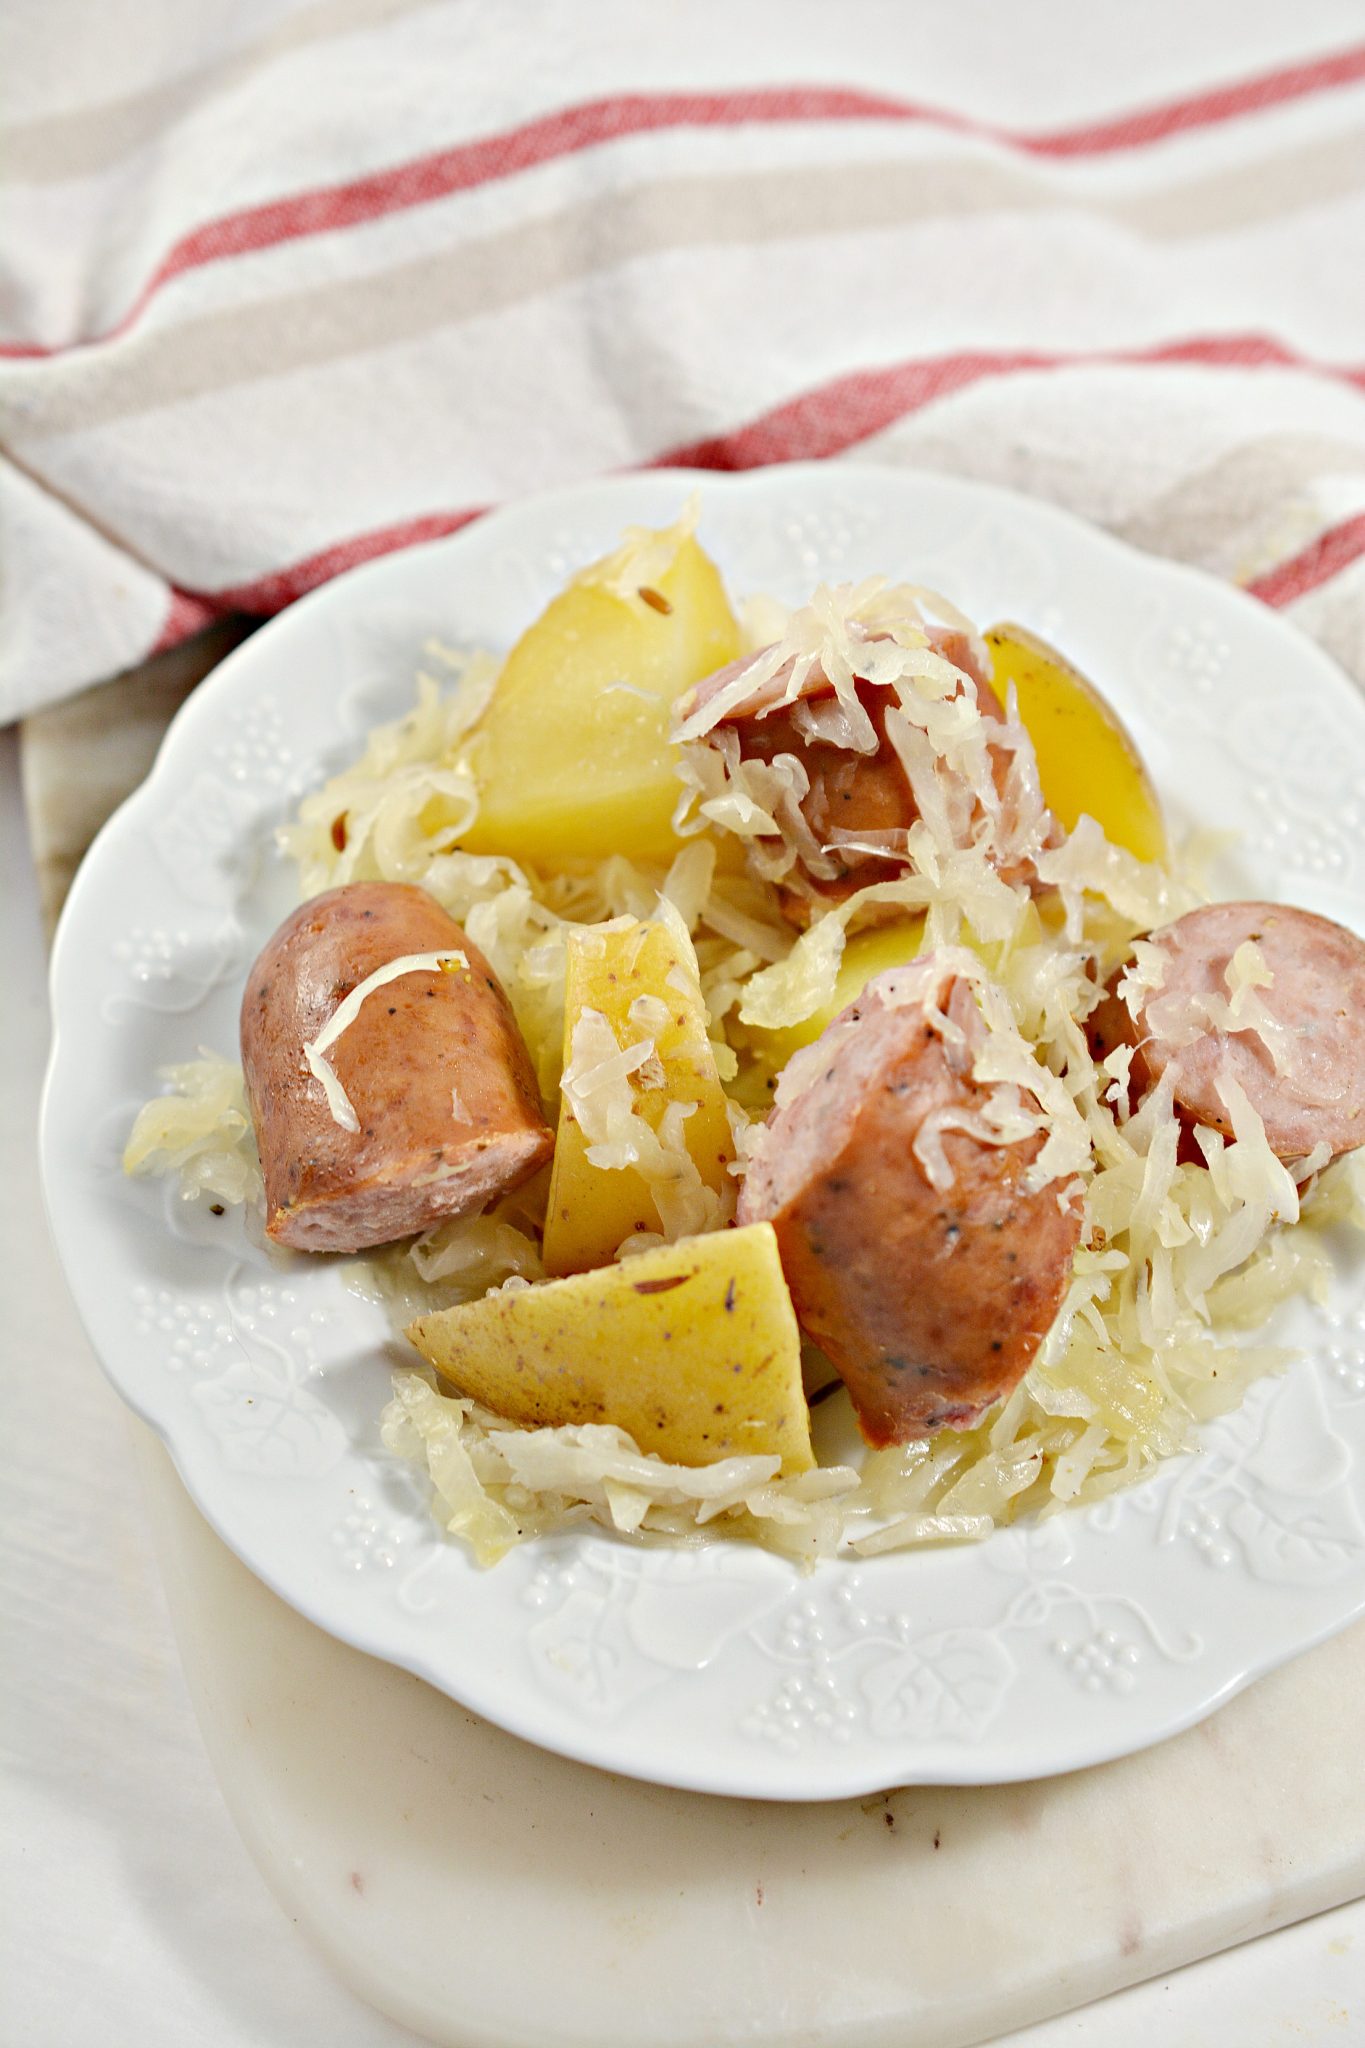 Polish Sausage, Sauerkraut And Potatoes (Crockpot) - Sweet Pea's Kitchen